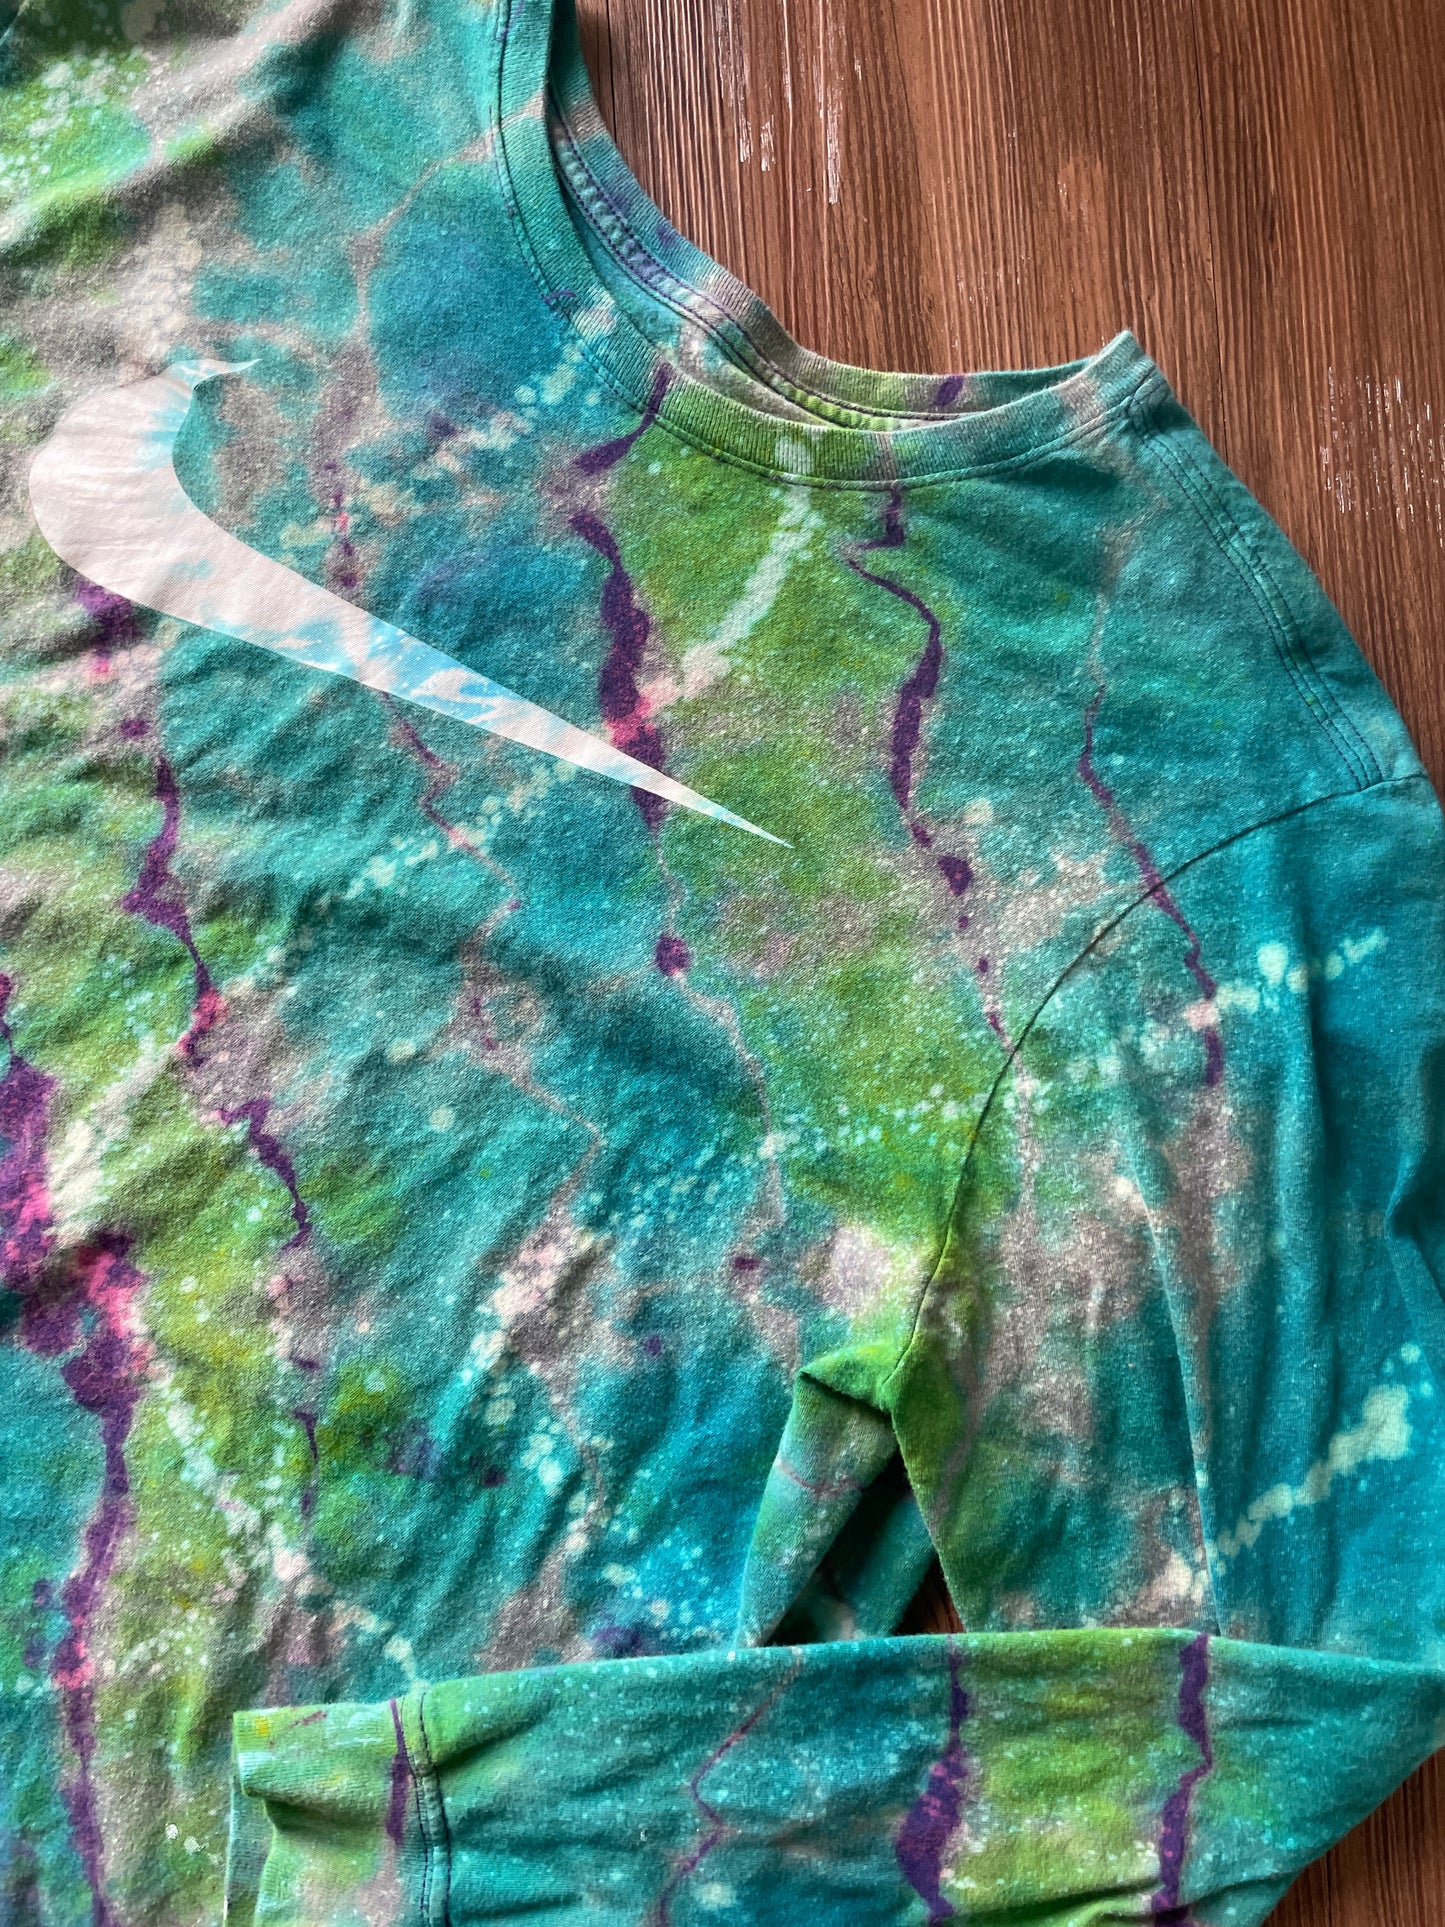 XL Men’s Nike Swoosh Handmade Geode Tie Dye T-Shirt | Green, Teal, and Purple Long Sleeve Tee